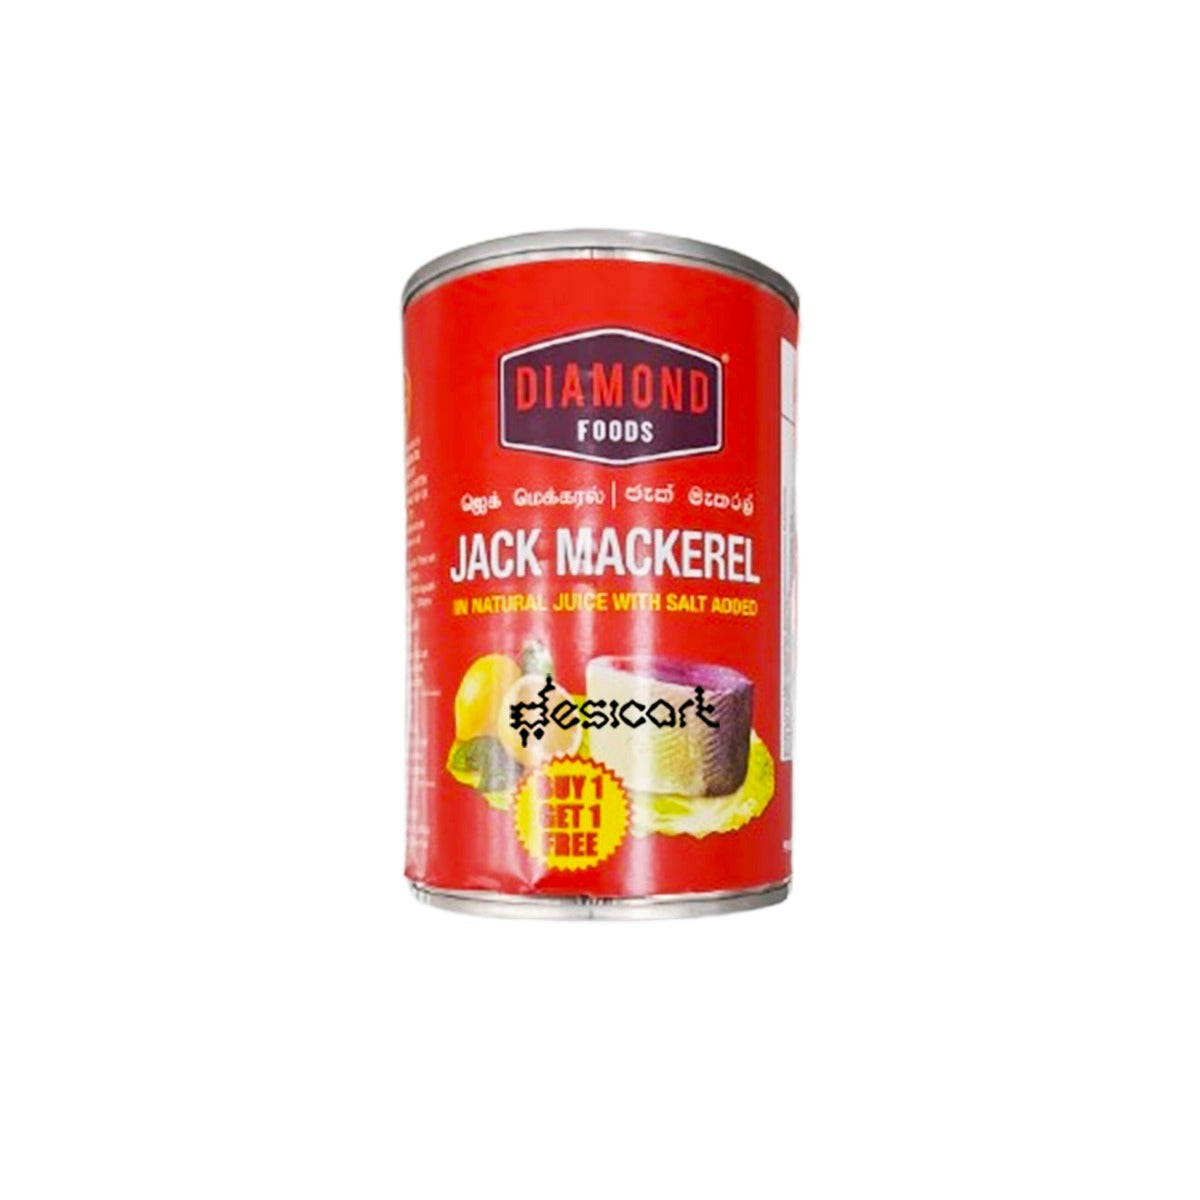 Diamond Jack mackerel in Natural Juice 425g